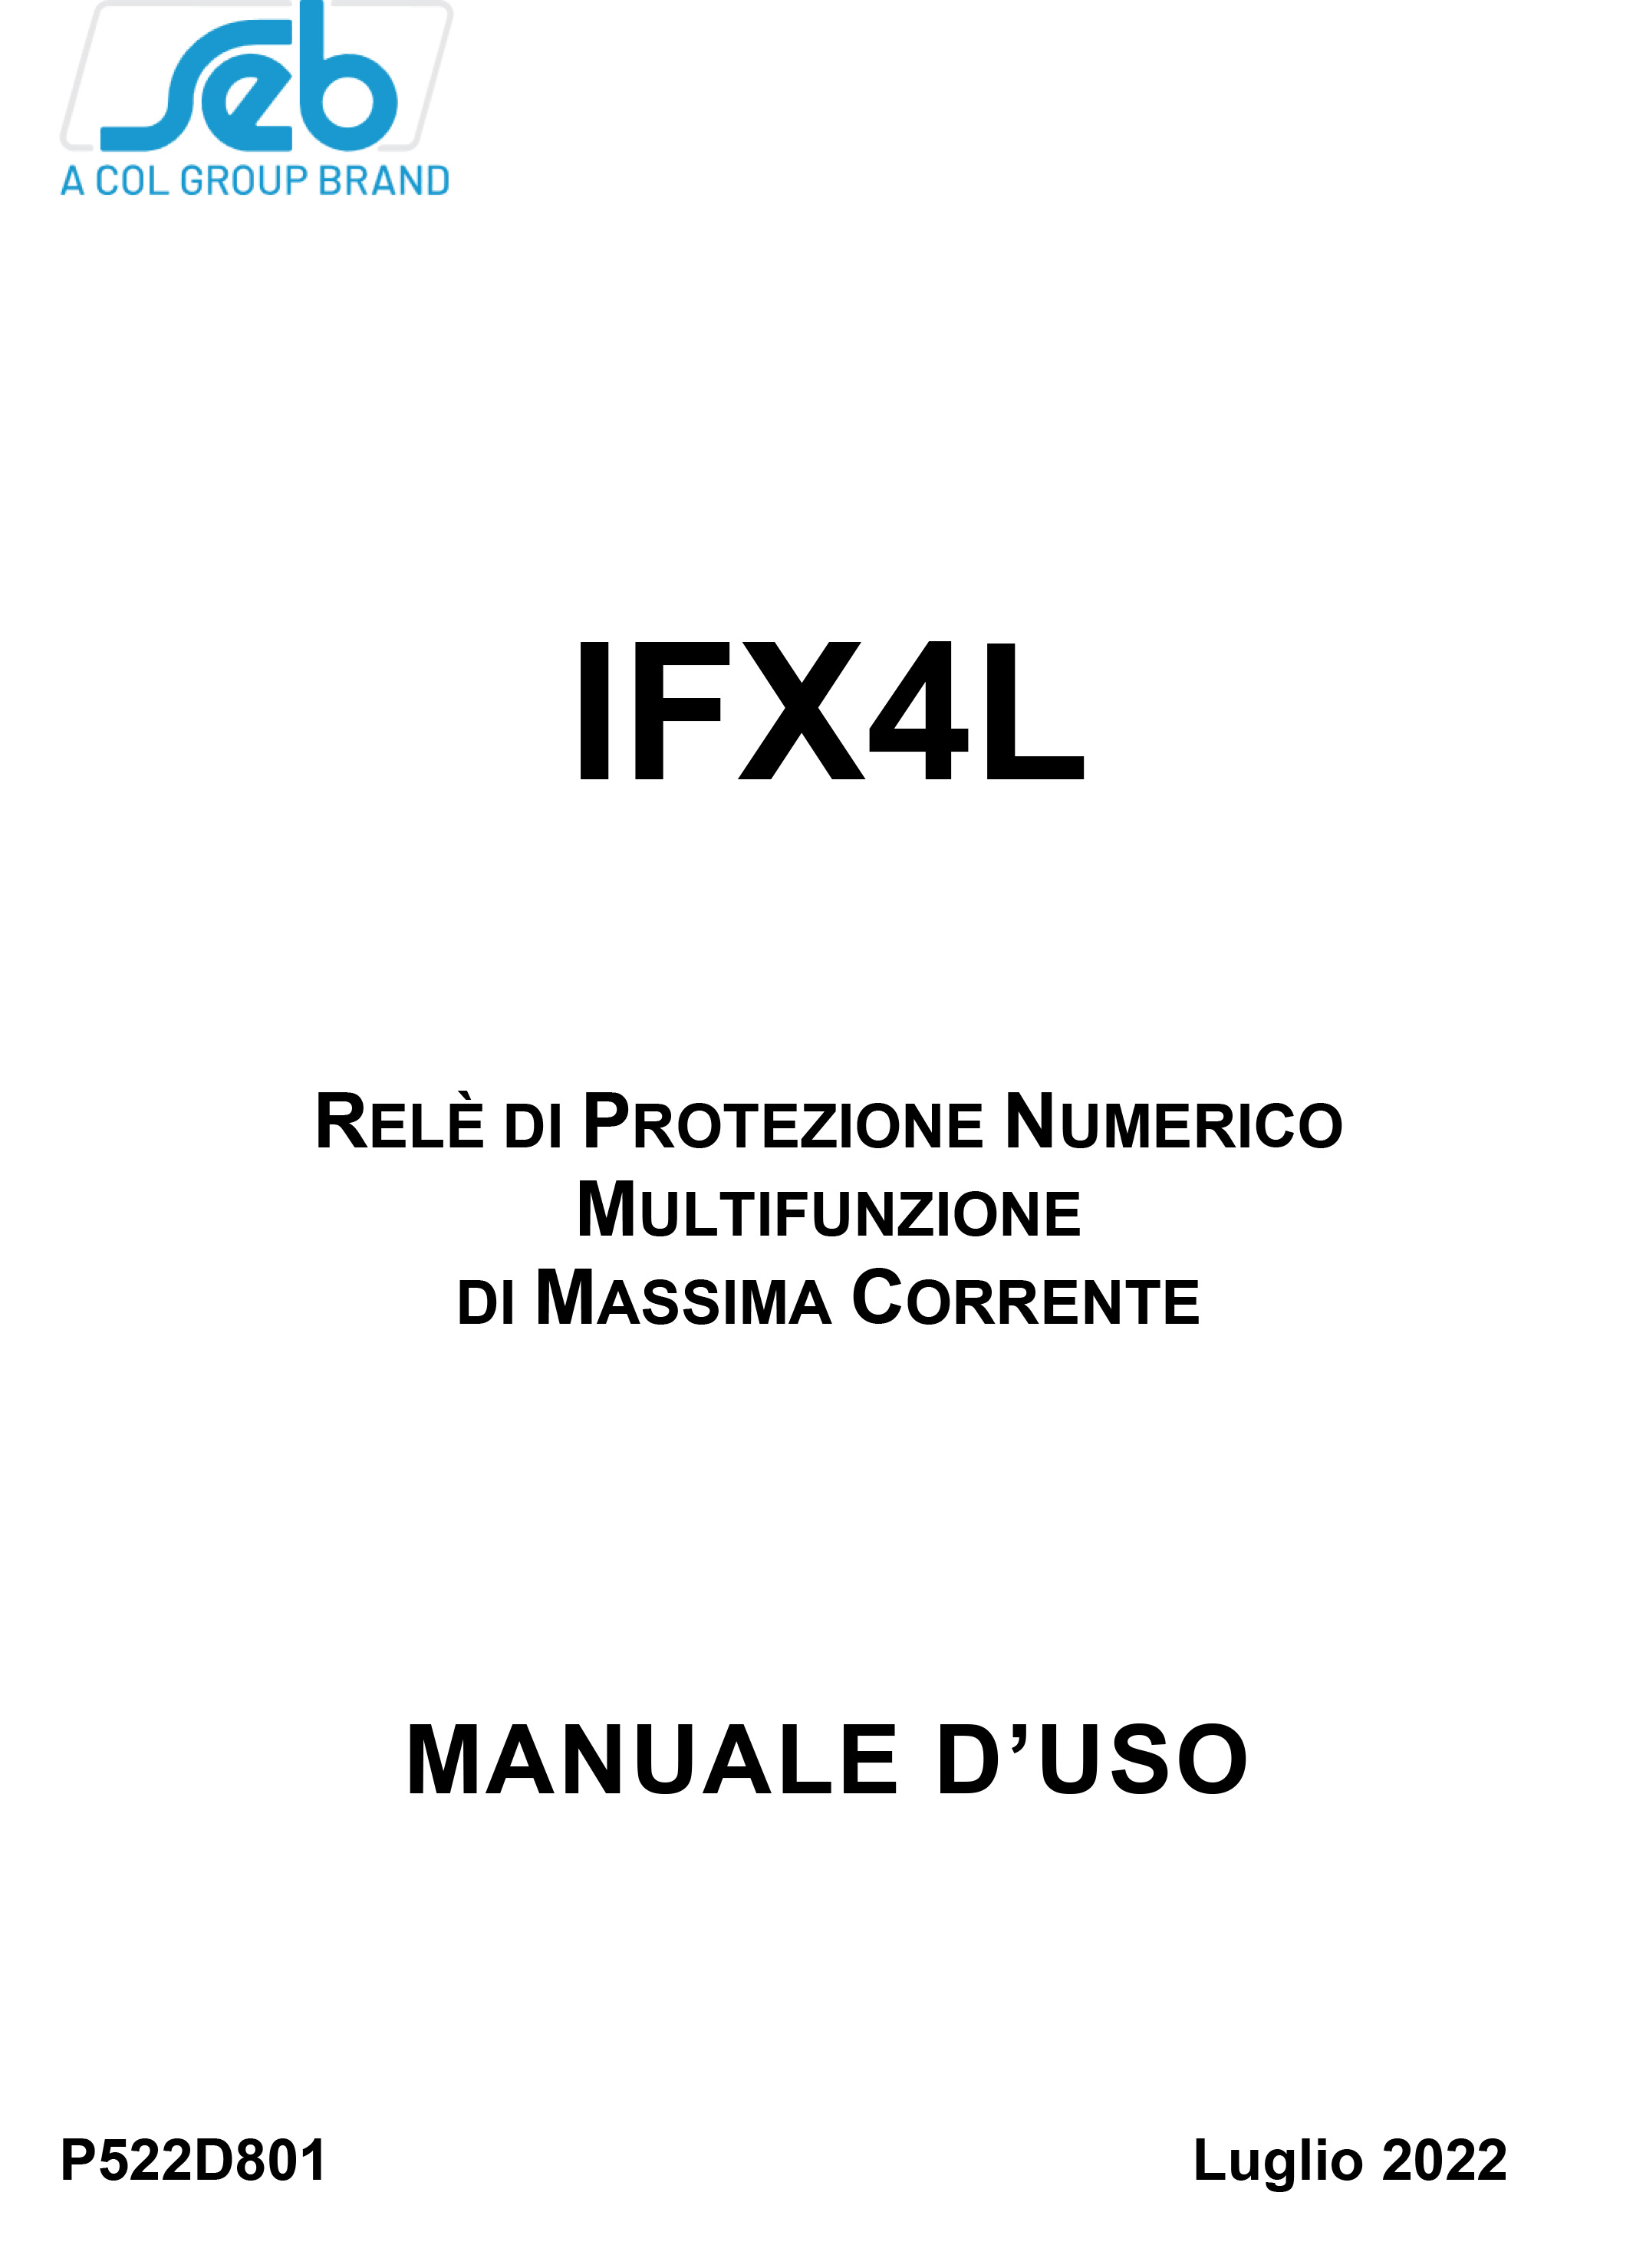 Manuale d'uso IFX4L